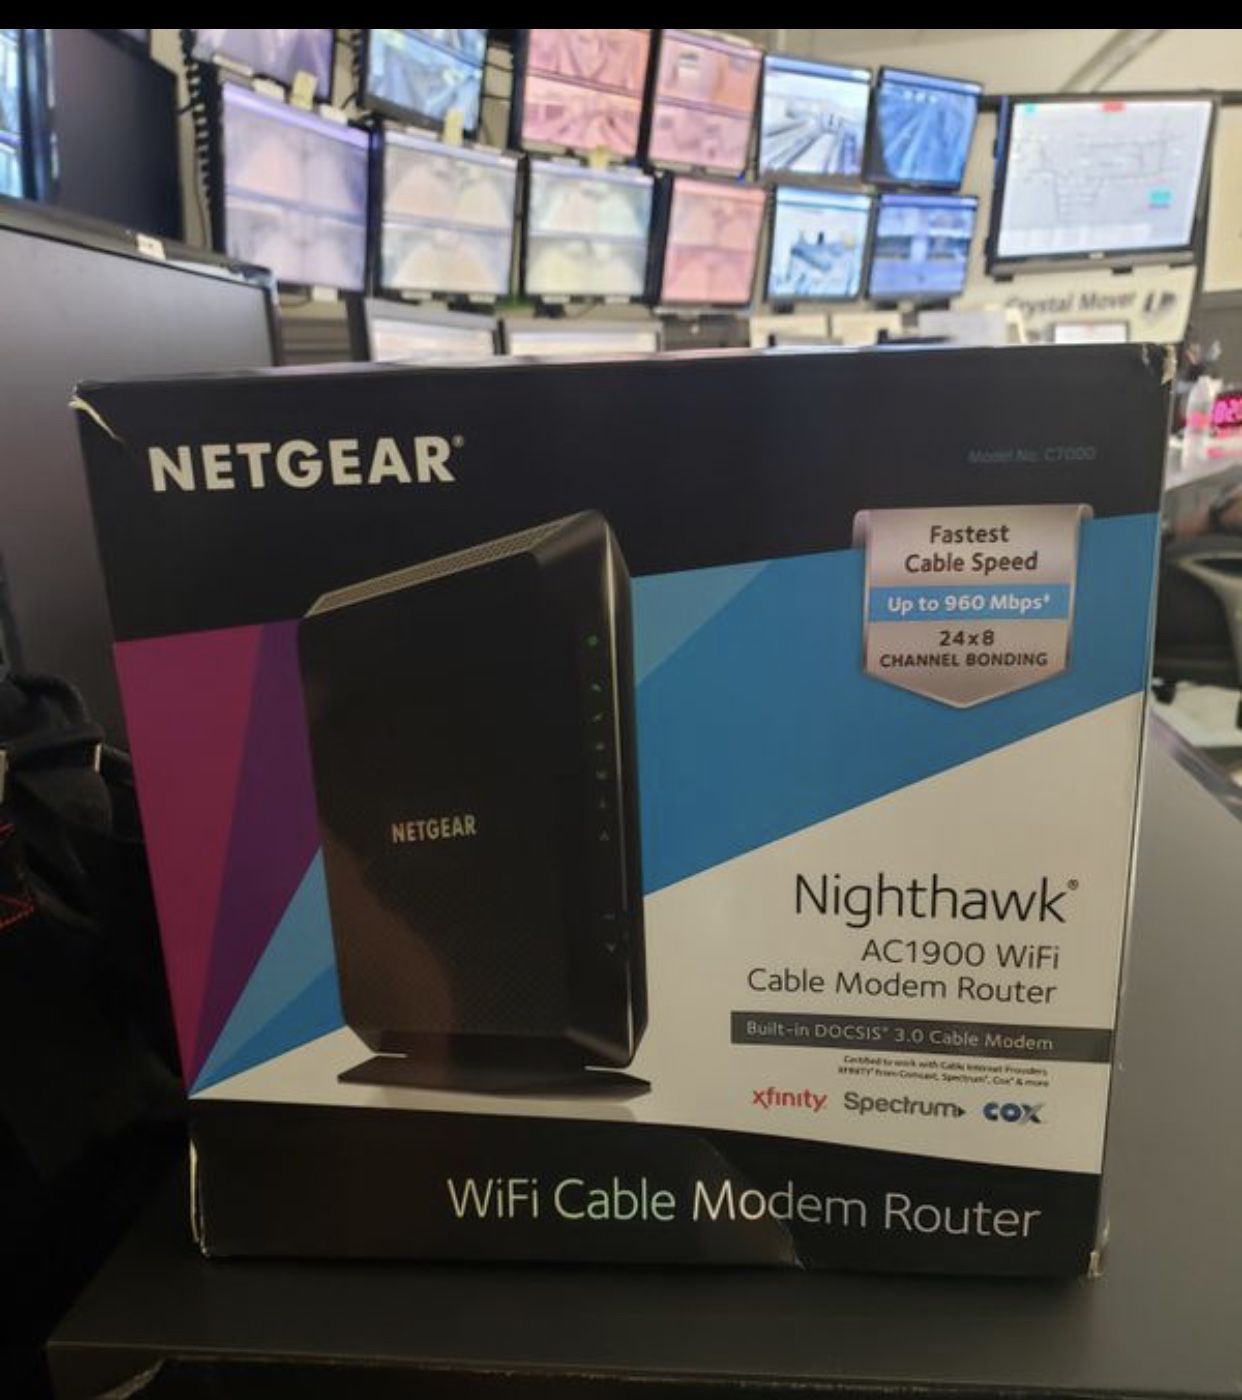 NETGEAR NIGHTHAWK AC1900 Dual Band Cable Modem Router Combo model (C7000v2)